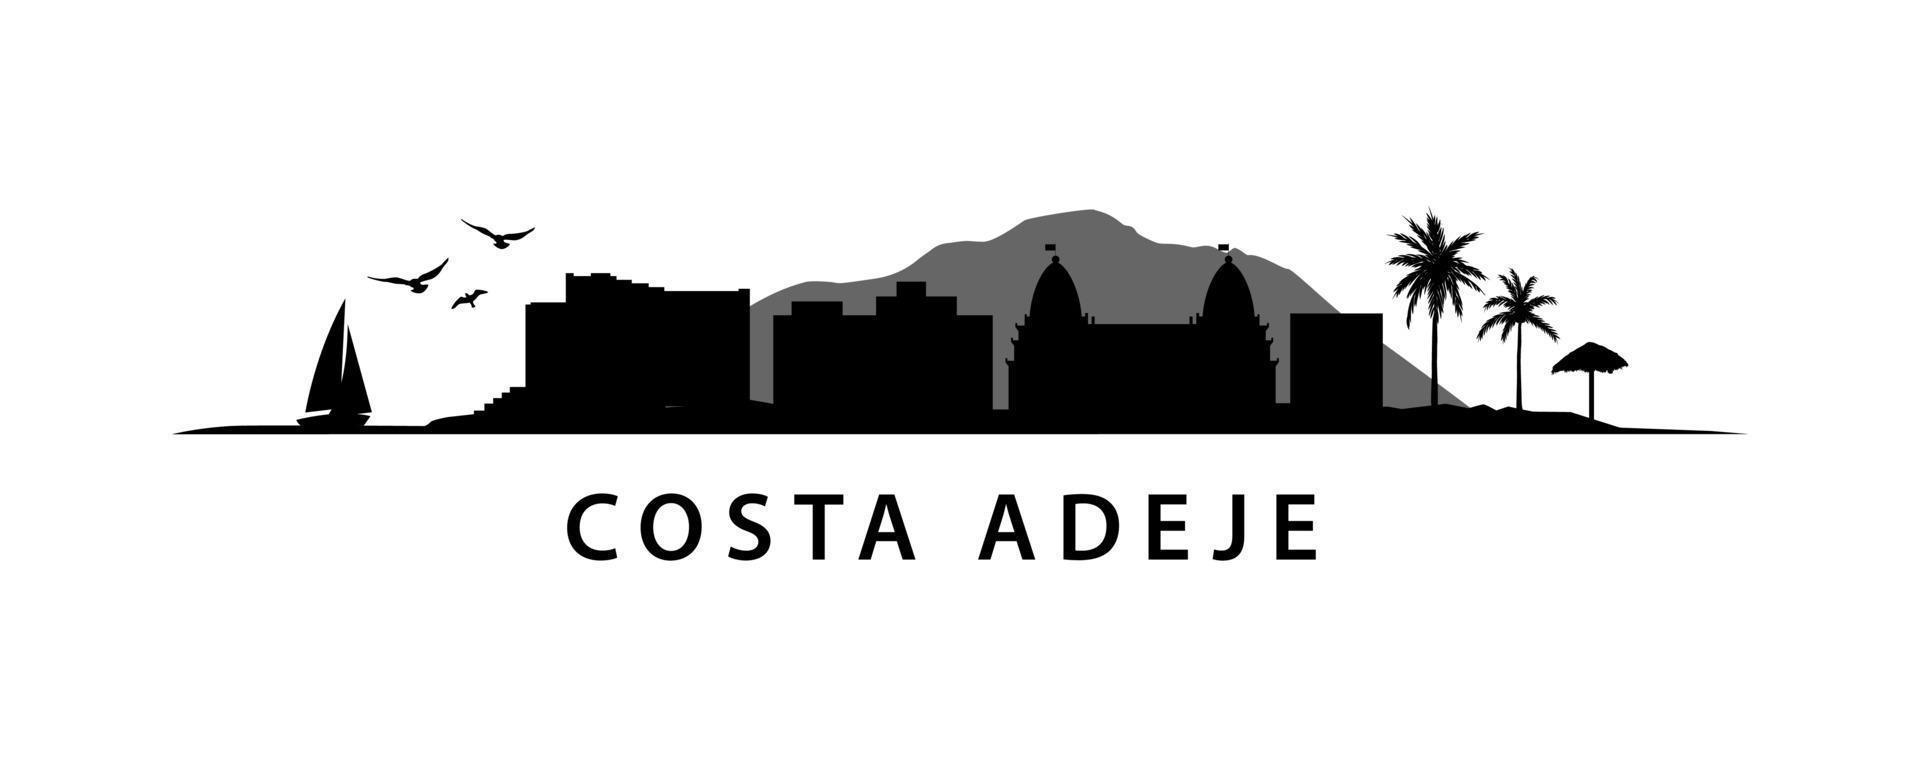 Costa Adeje Skyline Tenerife Island Santa Cruz. City Landscape Canary Islands. Coastline vector graphic.